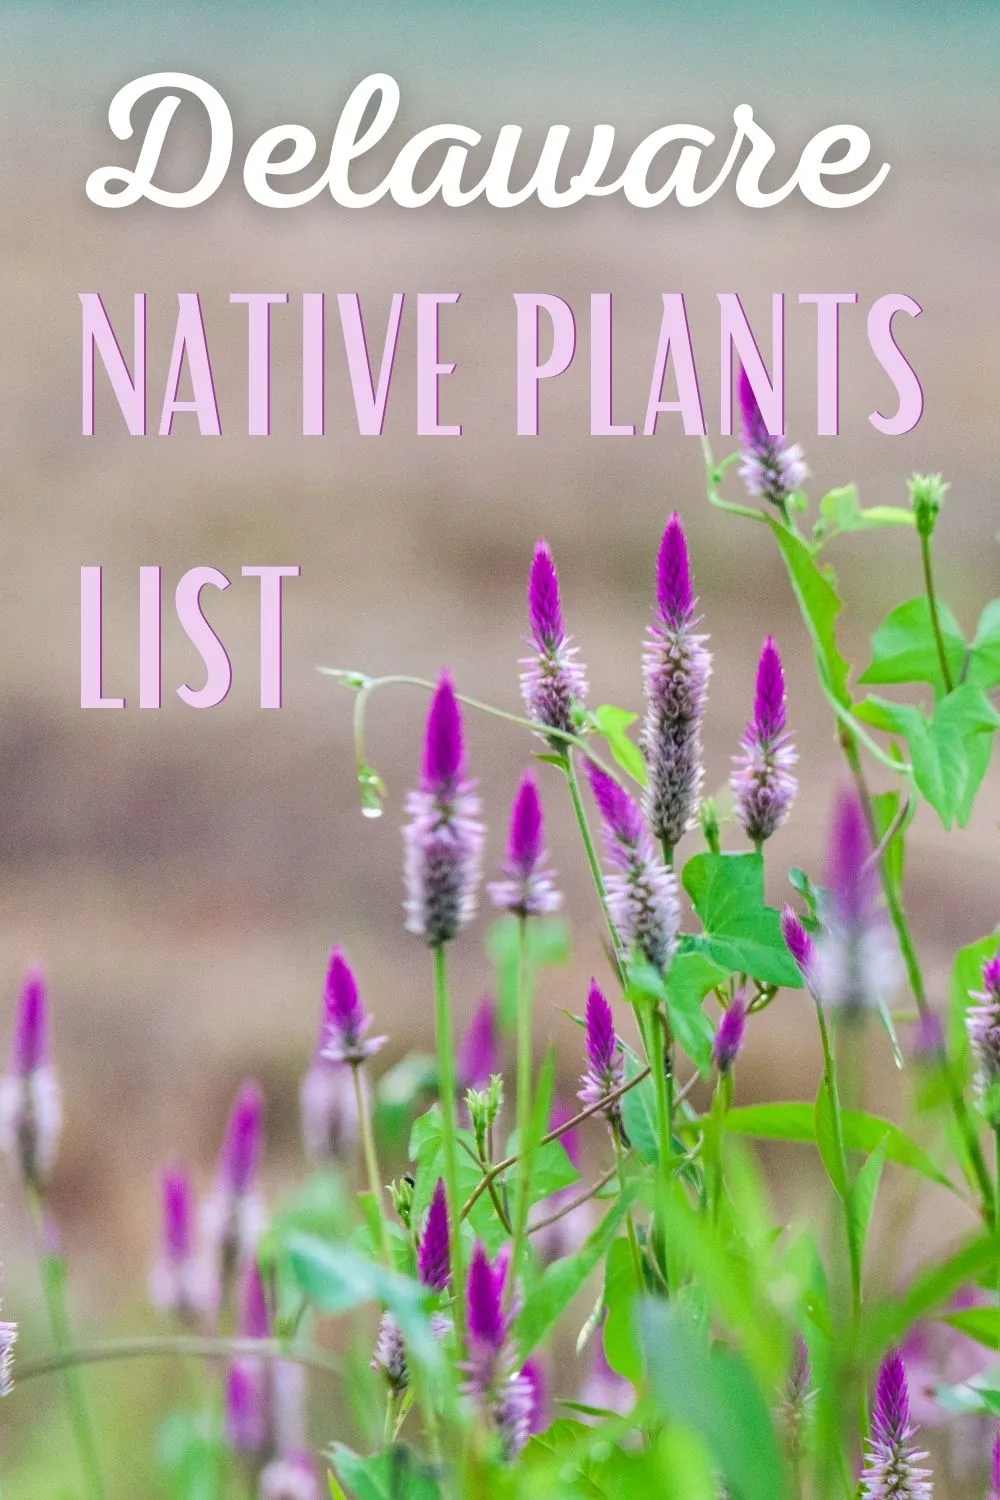 Delaware native plants list